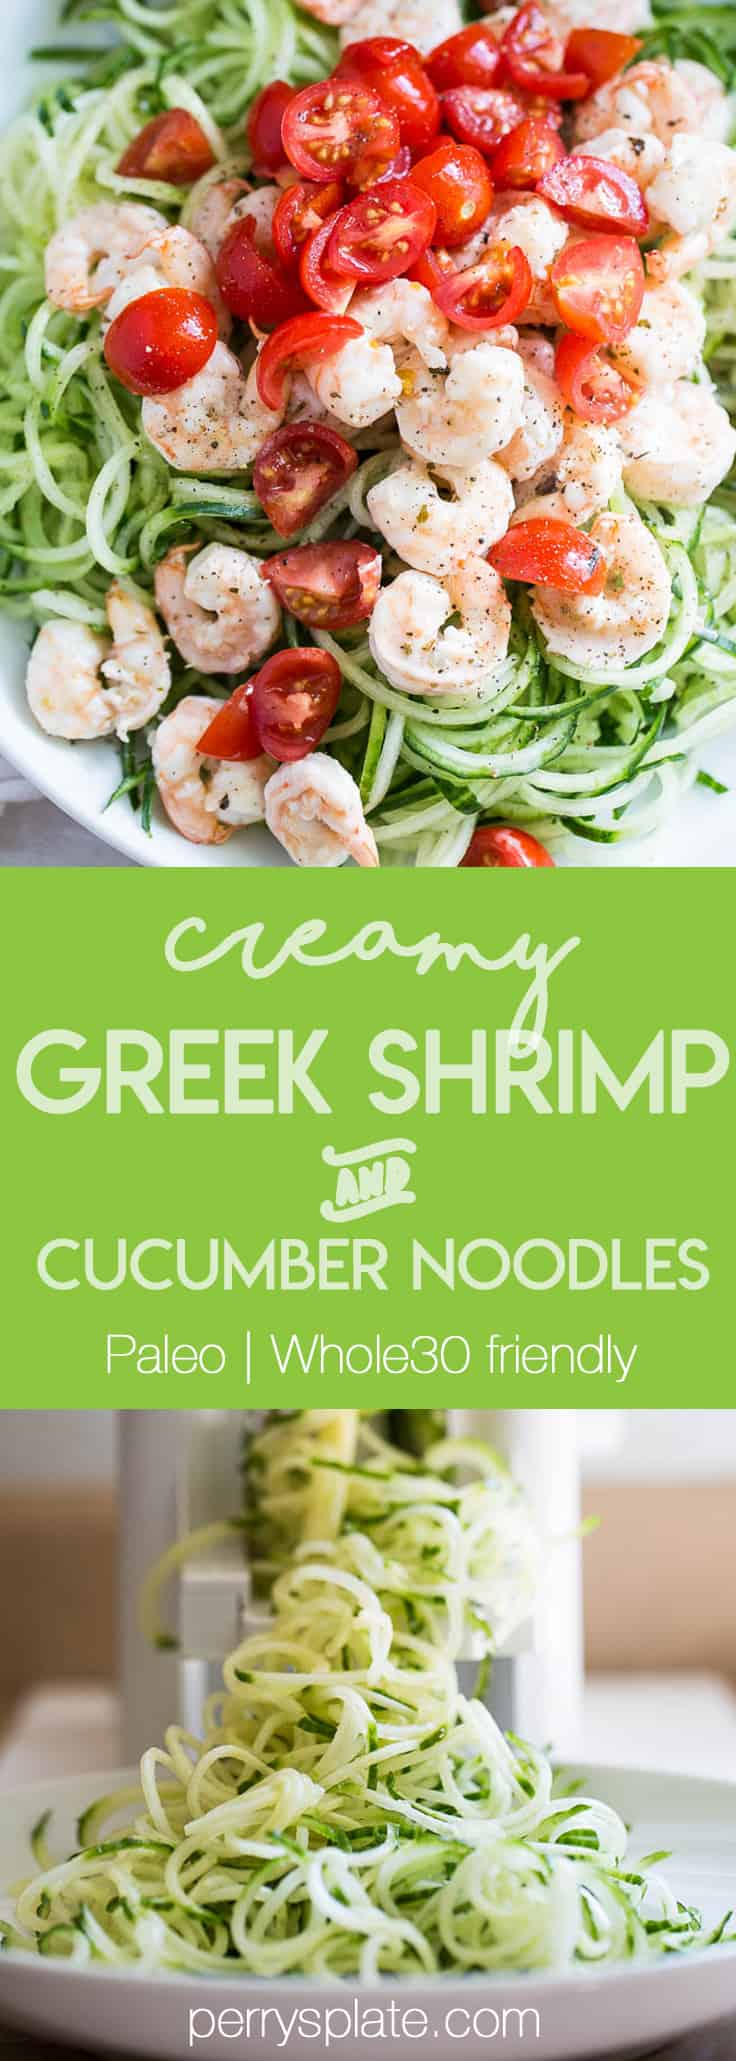 Creamy Greek Shrimp with Cucumber Noodles | Whole30 recipes | keto recipes | paleo recipes | gluten-free recipes | perrysplate.com